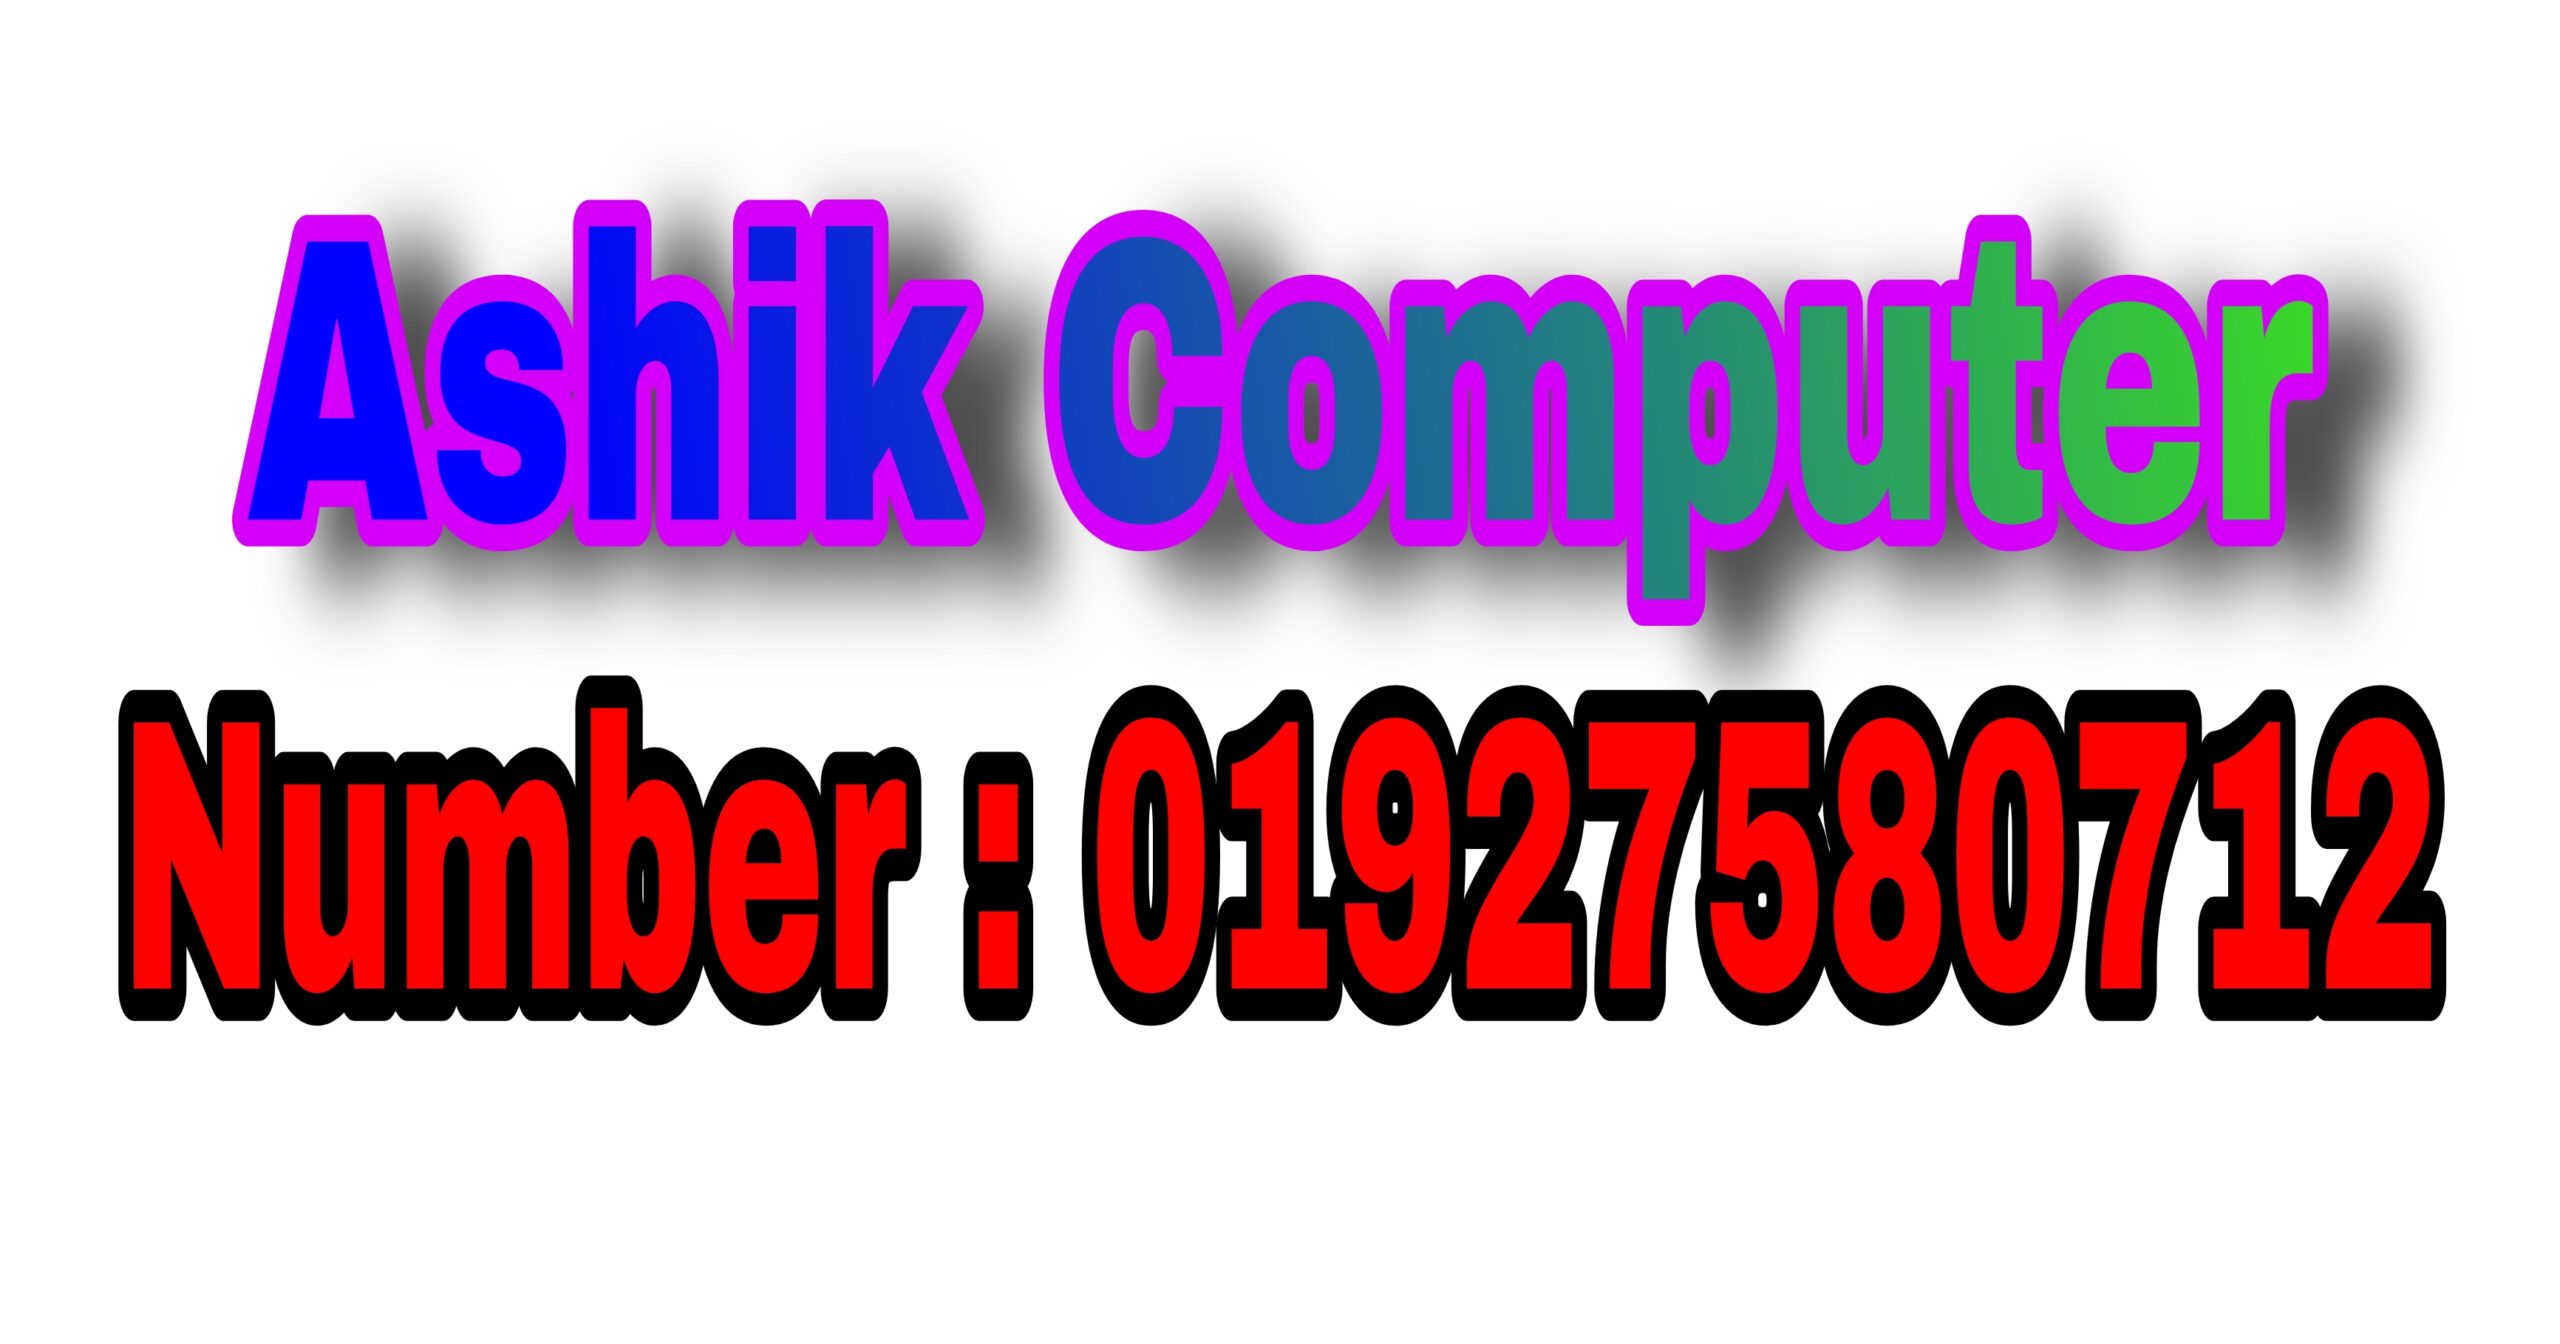 Ashik Computer Number